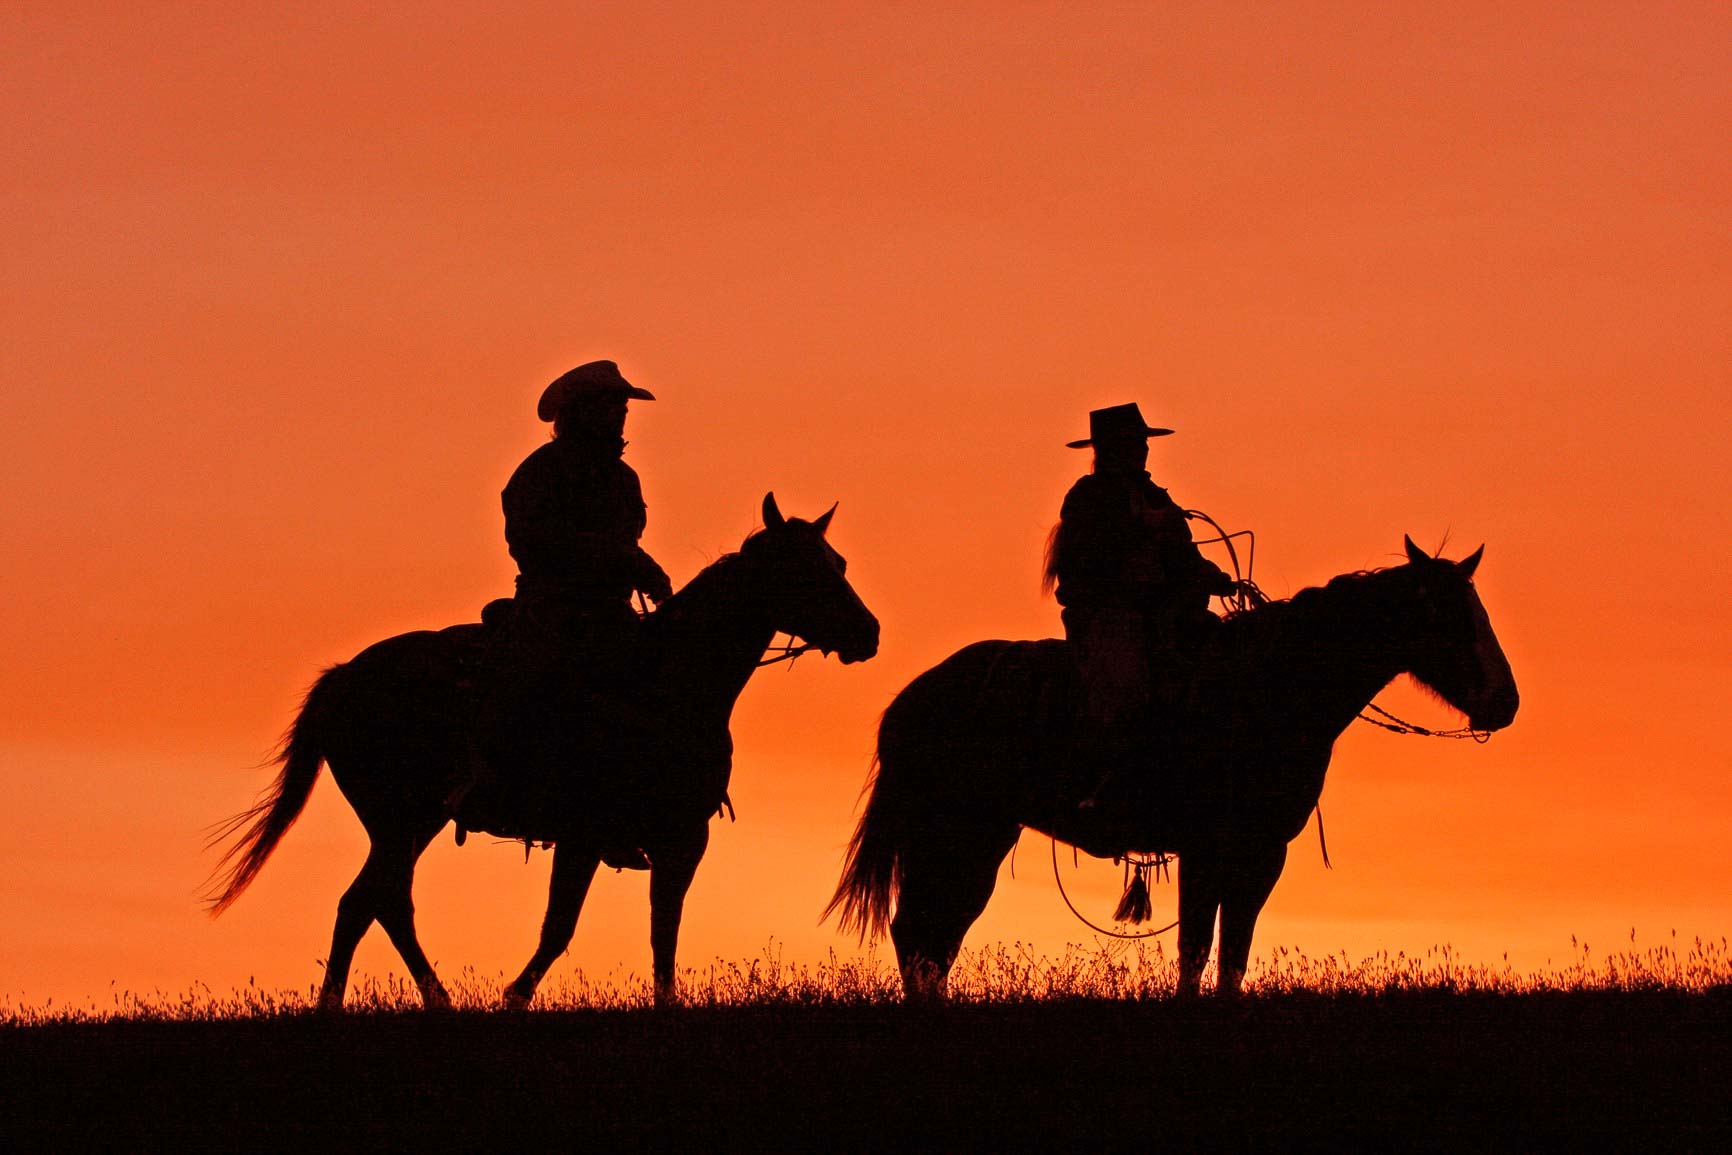 Silhouettes of cowboys on horseback at sunset, Source: Photodune.net